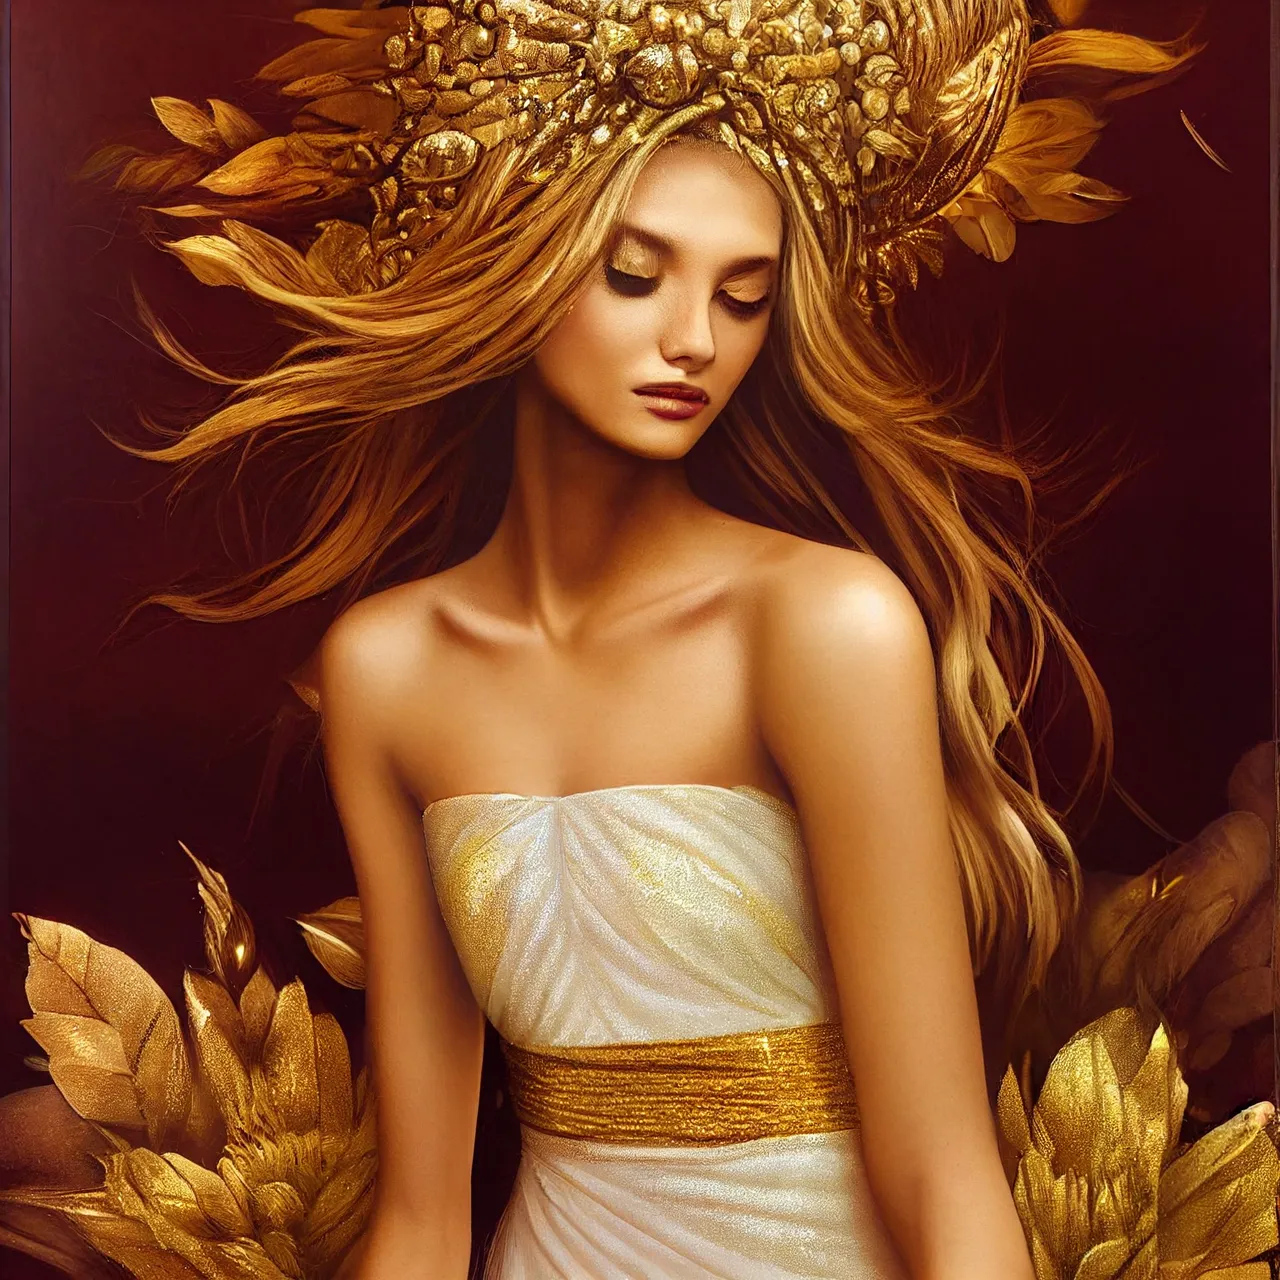 mamrita_wild_goddess_in_white_dress_golden_shimmer_blond_ca001a7c-2c57-49bf-b77d-cc2917bfc379.png